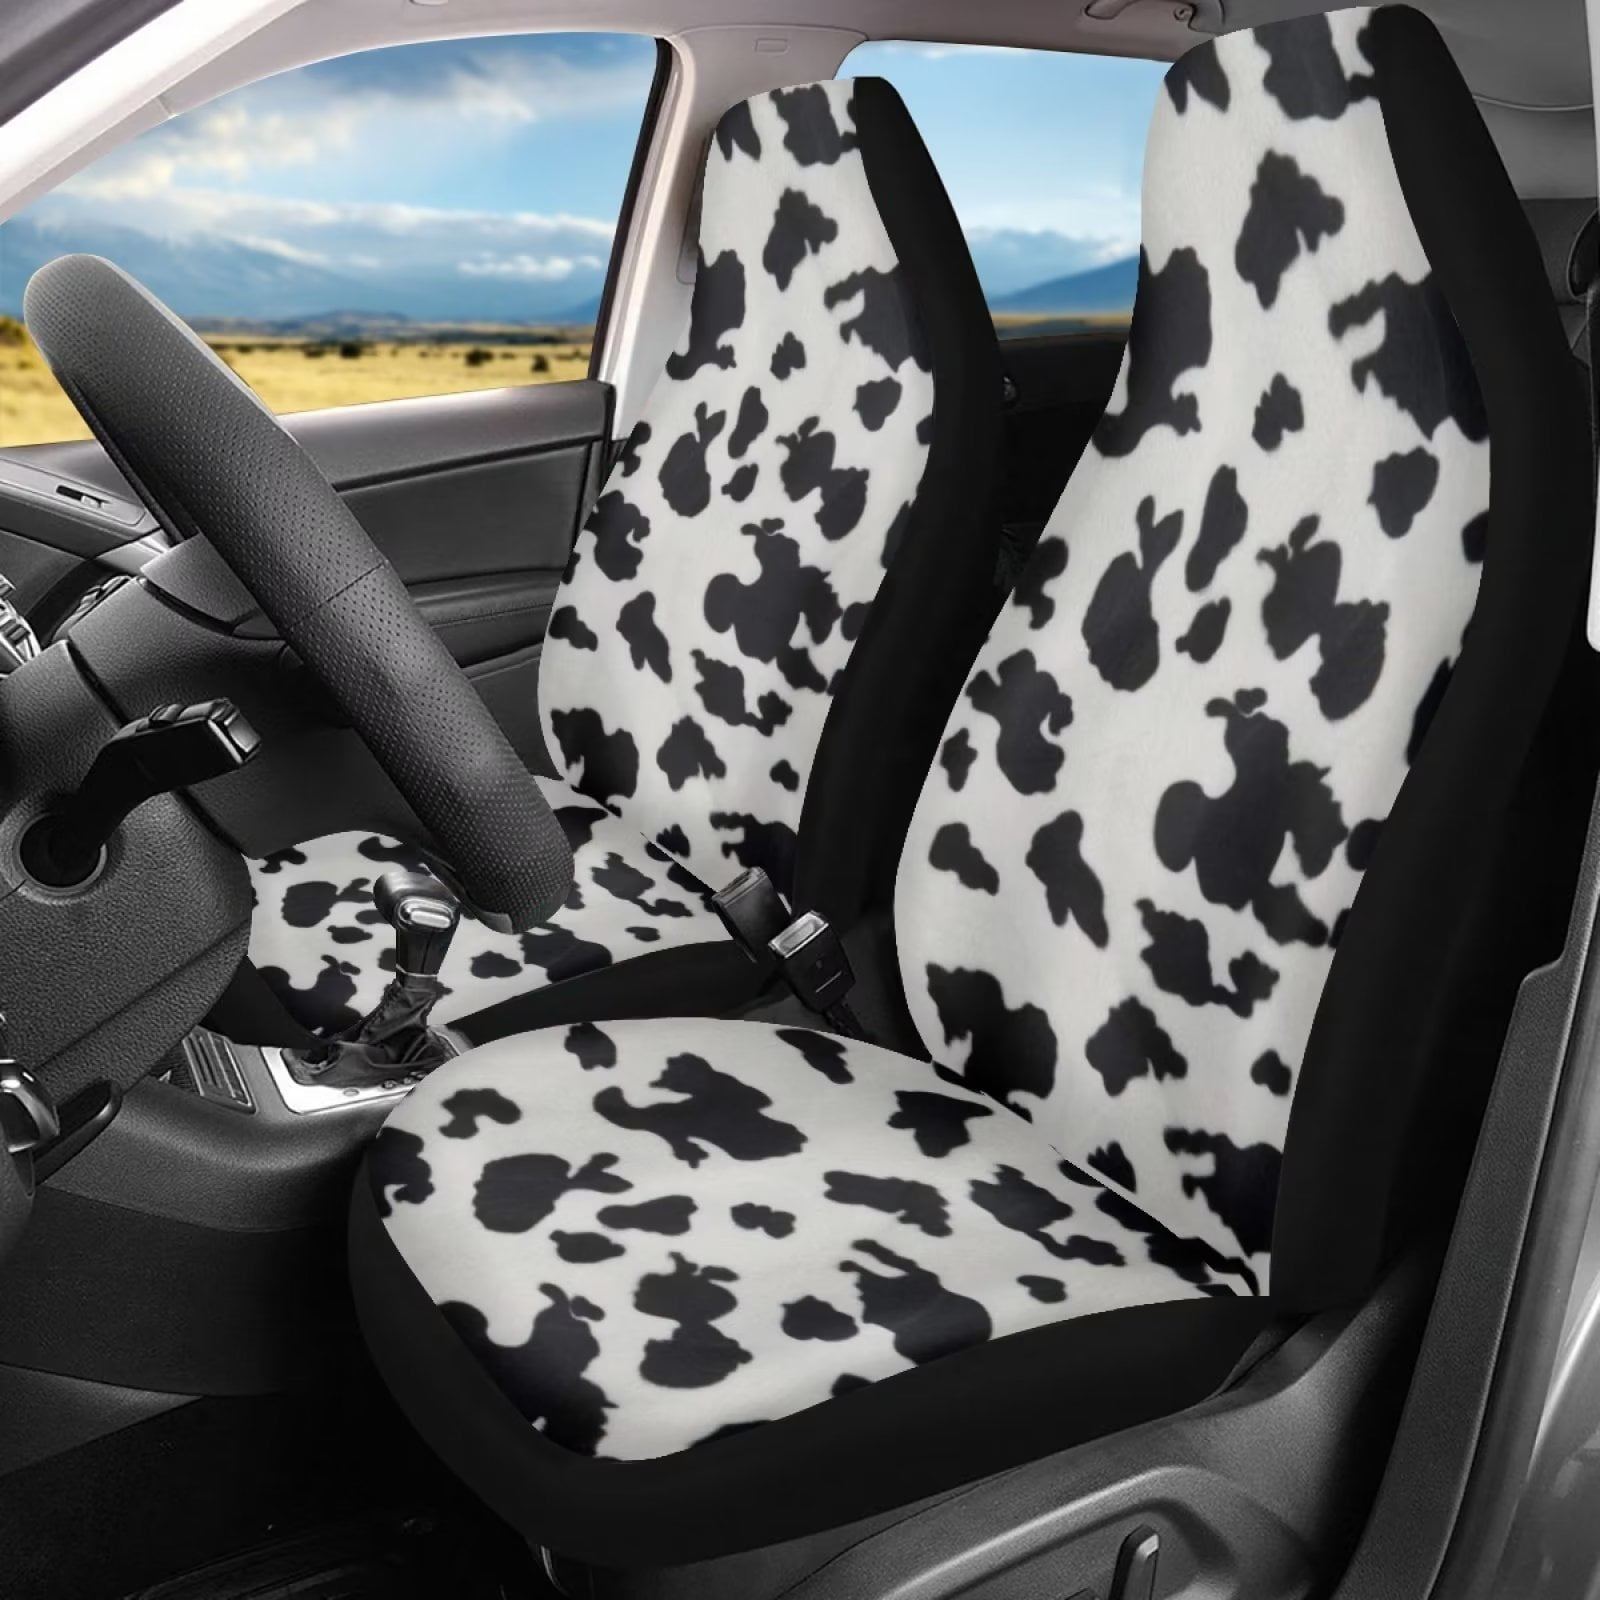  QZLAN Western Cow Print Car Seat Covers Set of 2